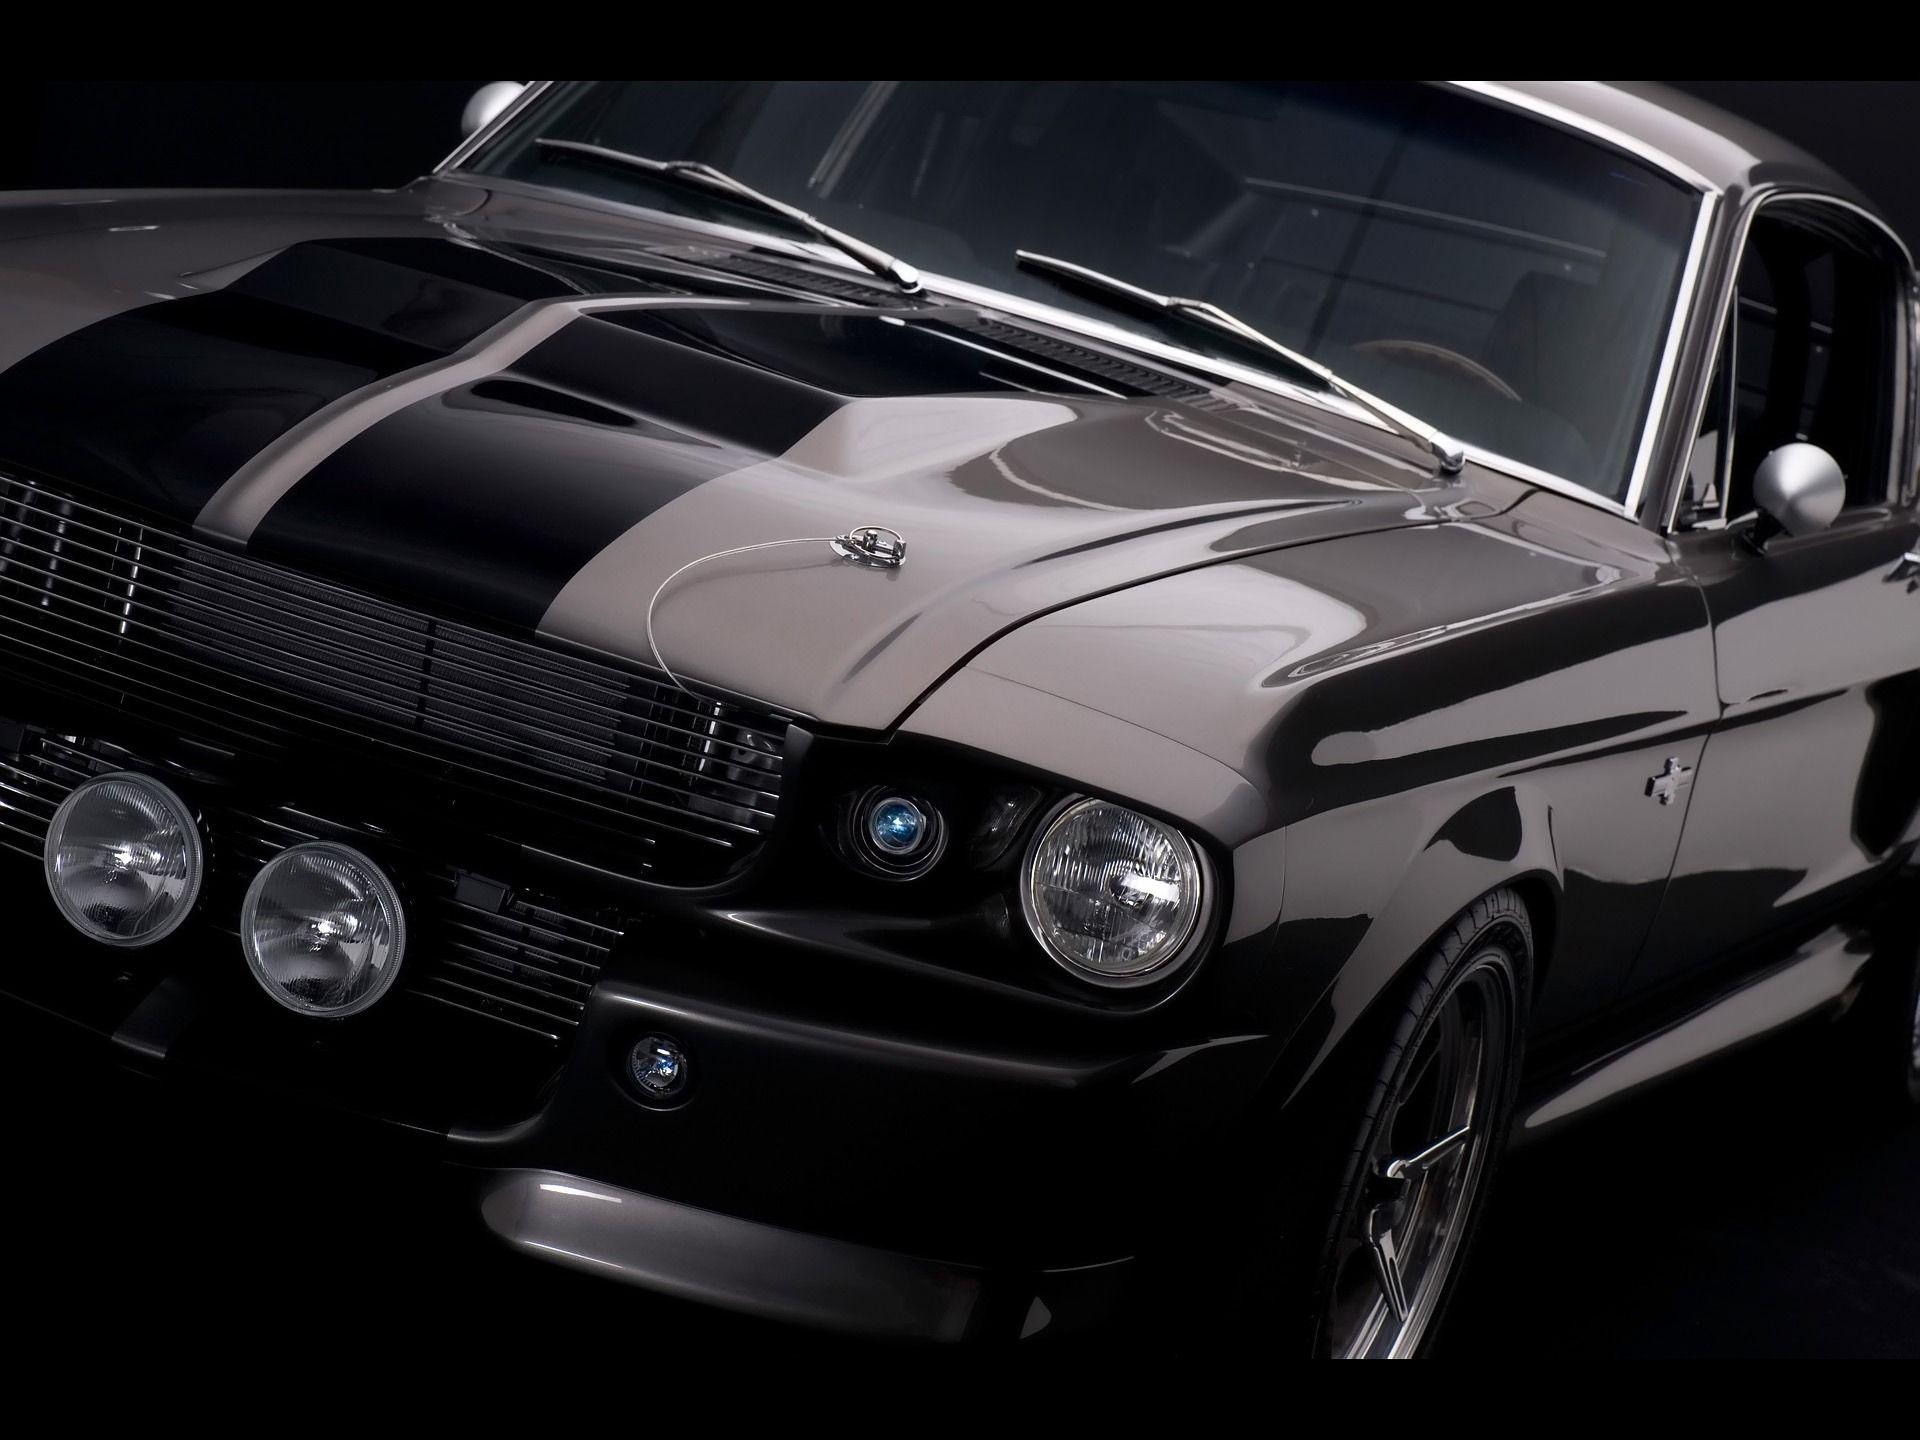 Ford Mustang Wallpaper Muscle Cars Cars Wallpaper in jpg